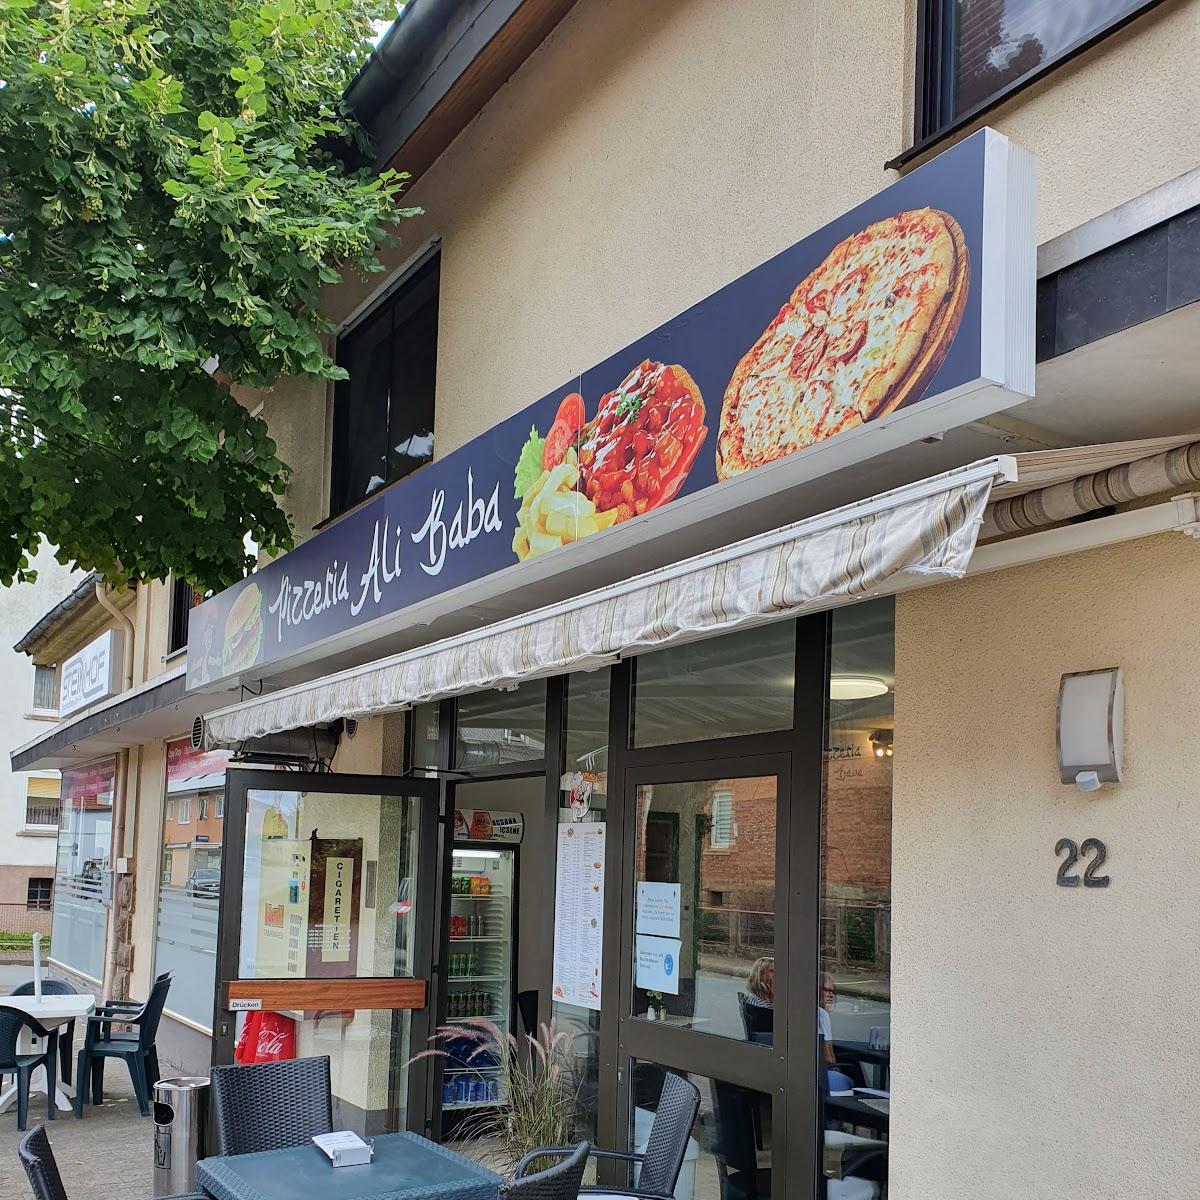 Restaurant "Pizzeria Ali Baba" in Twistetal